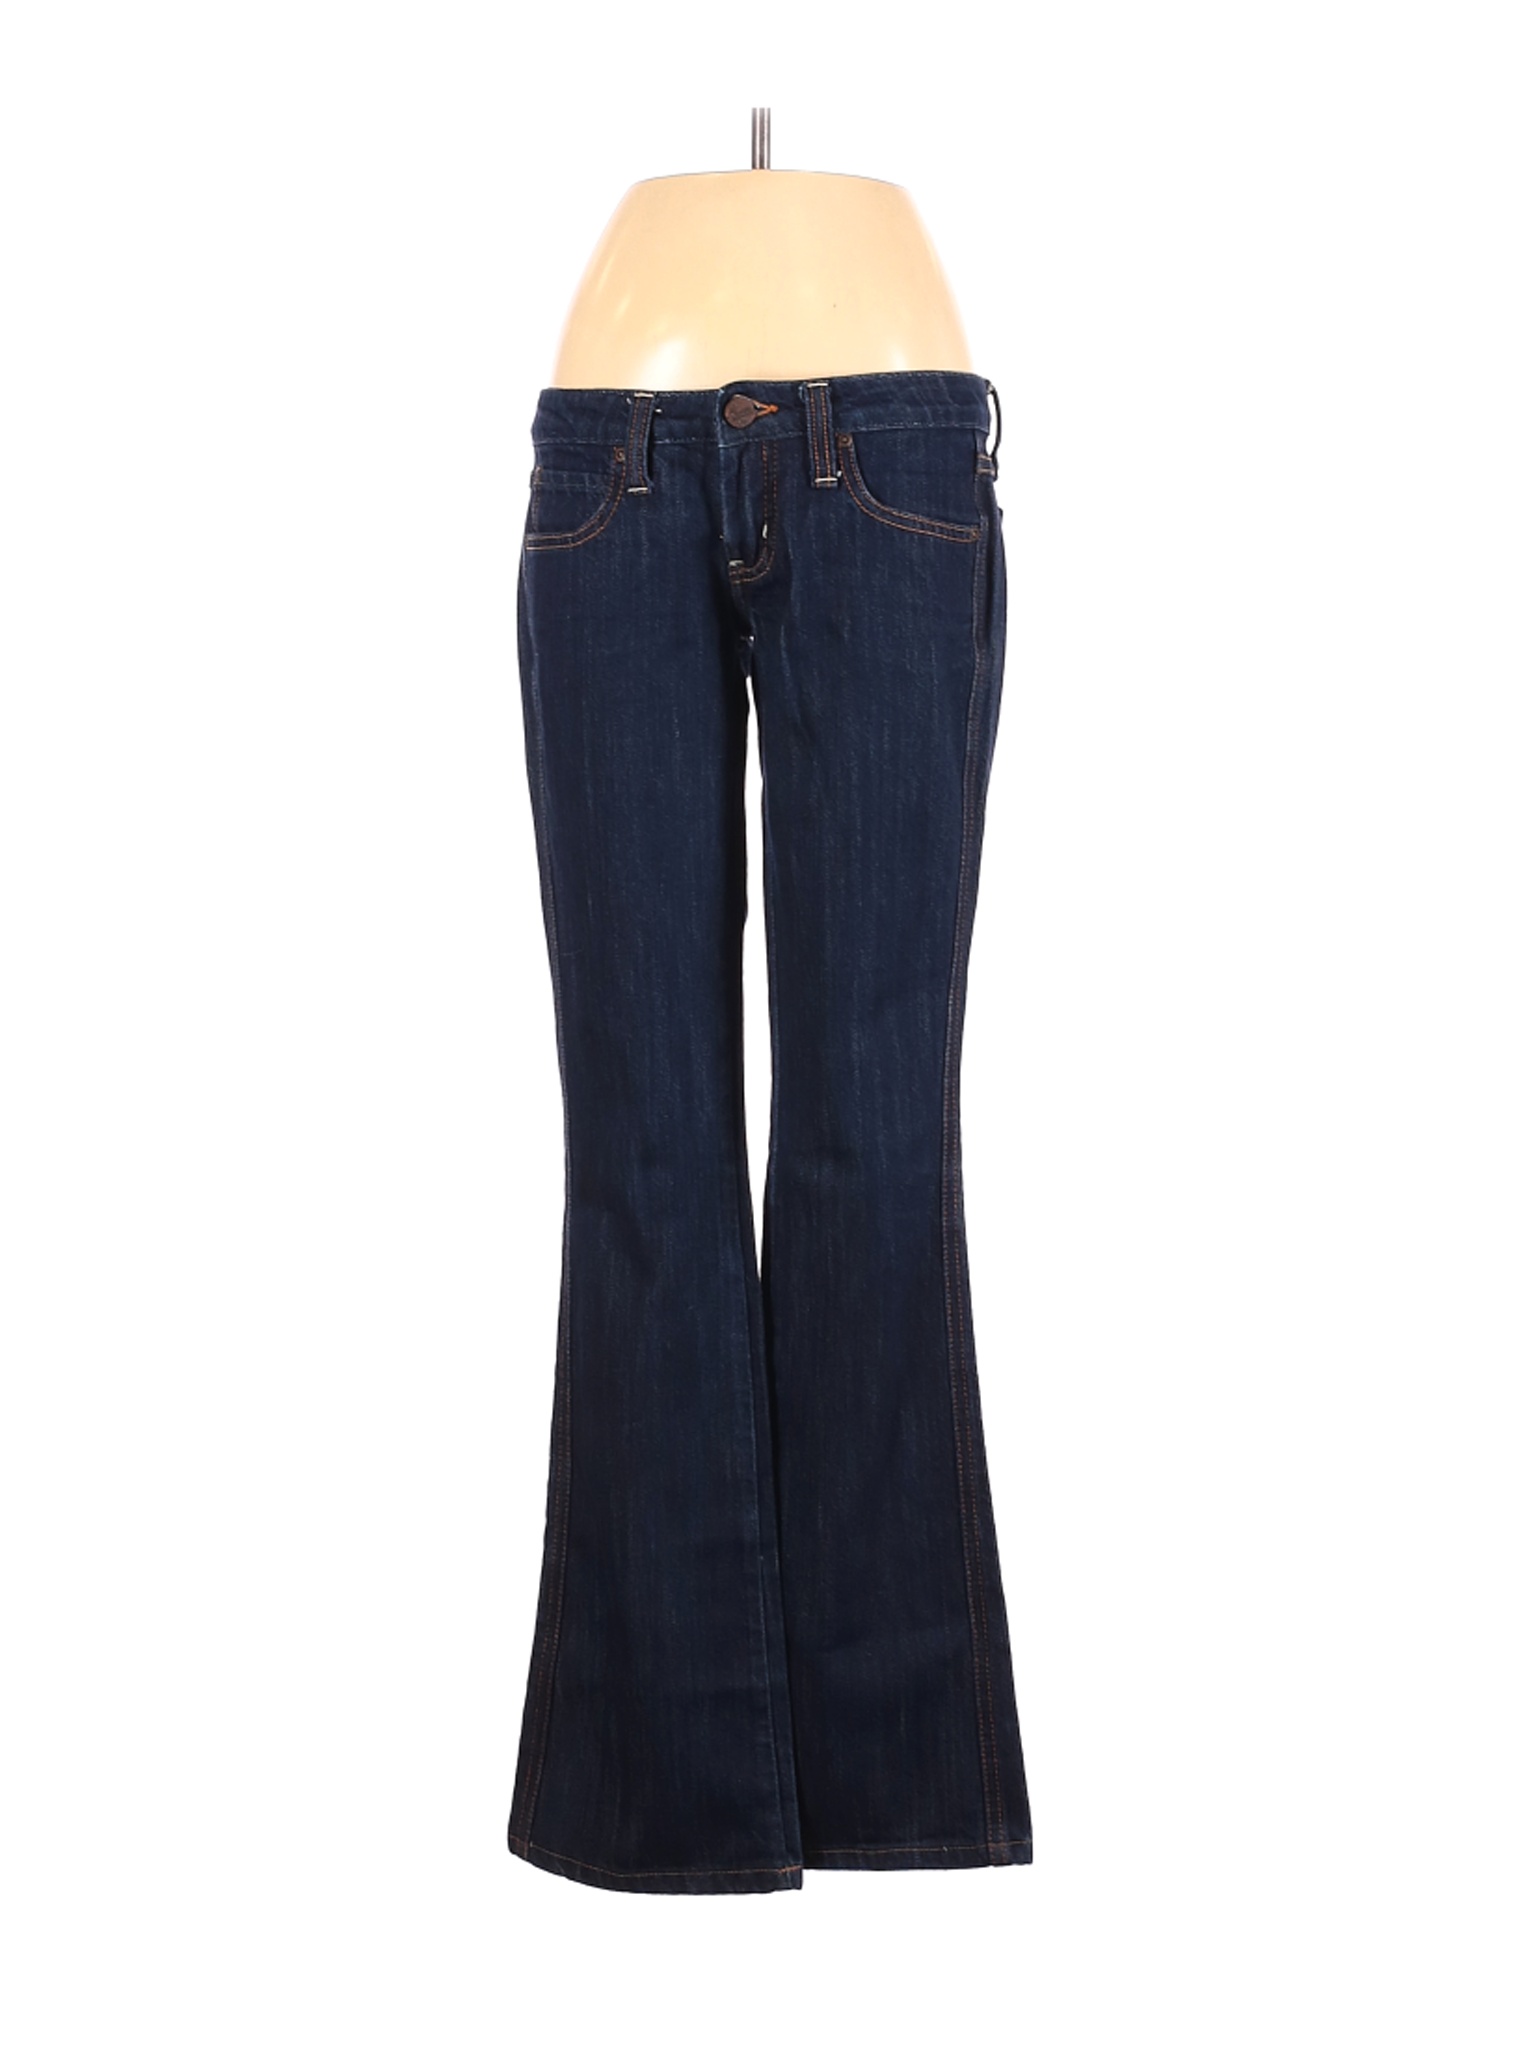 Frankie B. Women Blue Jeans 24W | eBay